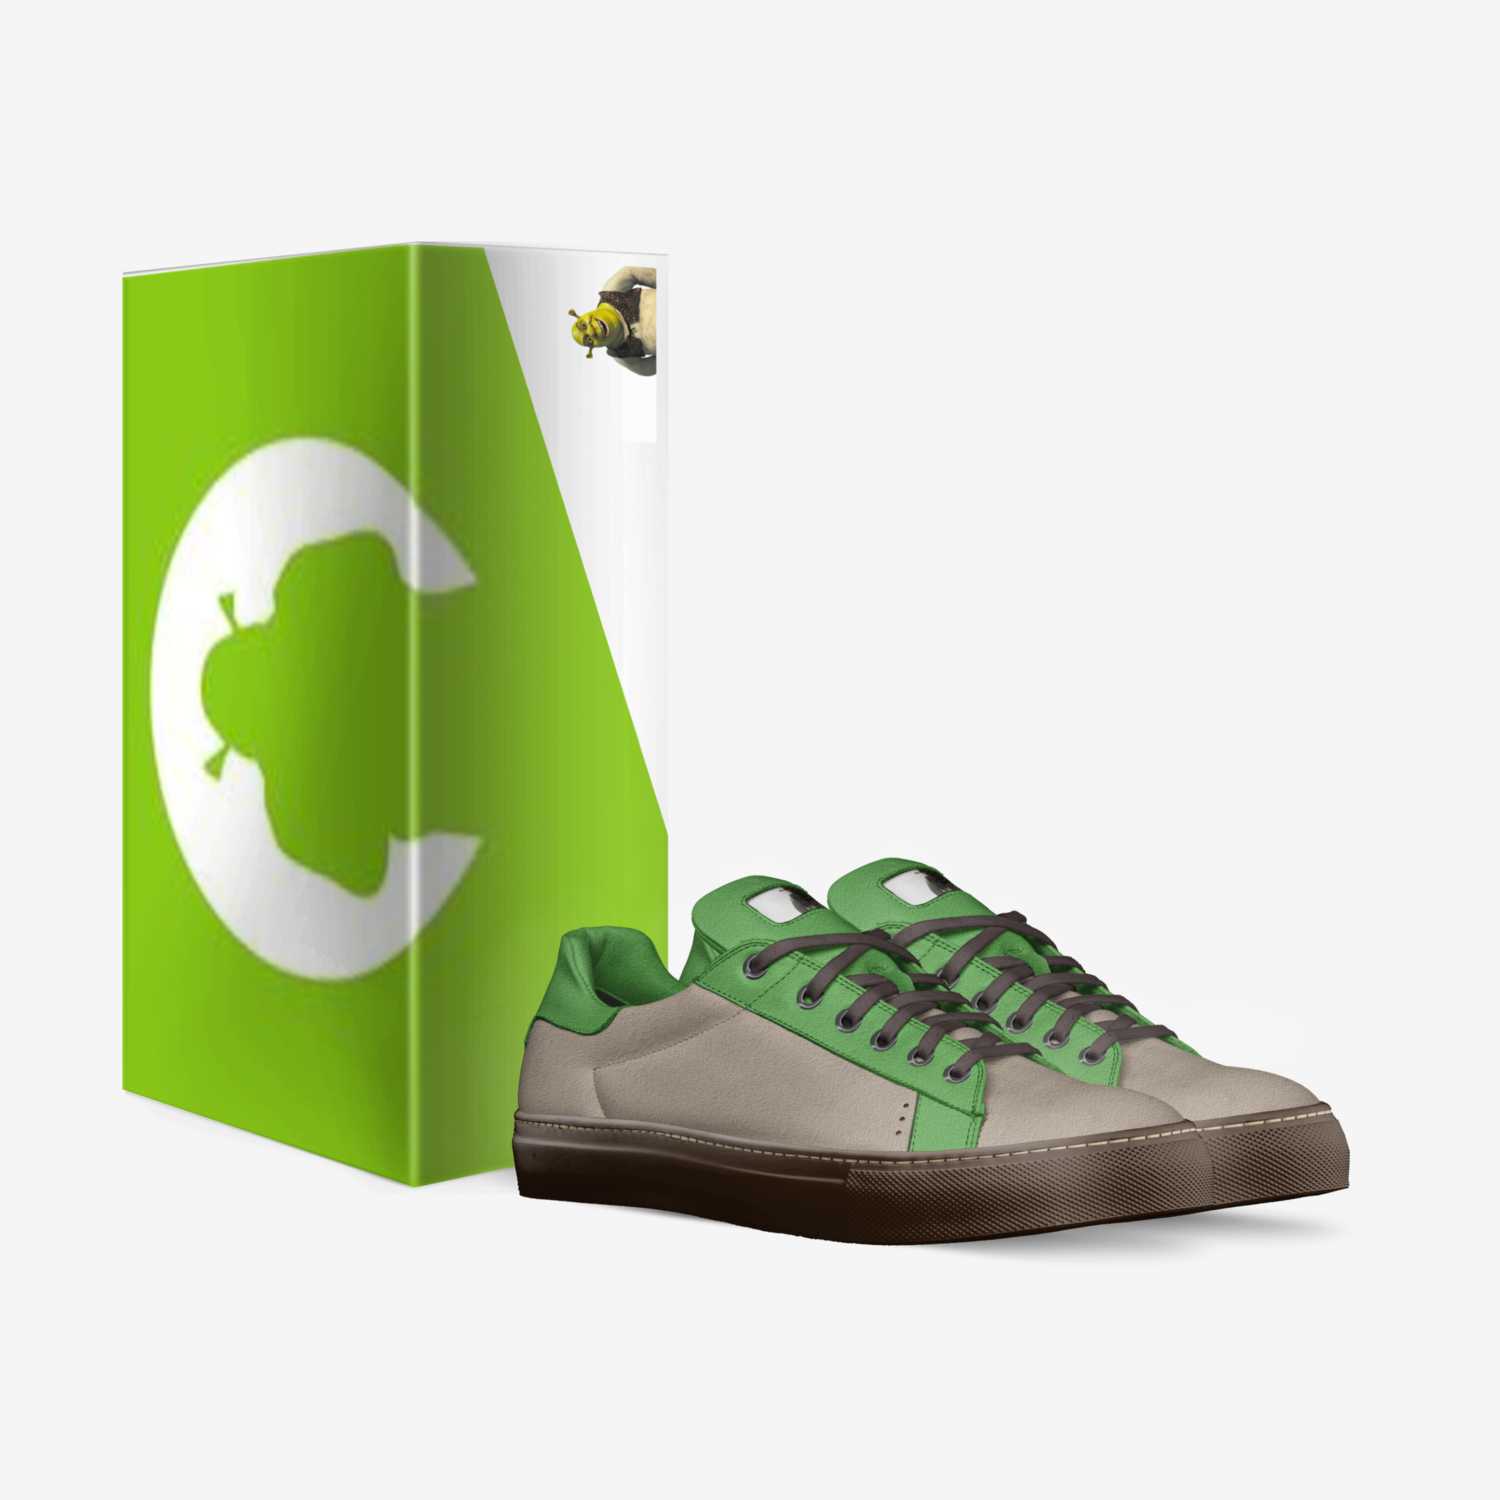 Shrek A Custom Shoe Concept By Kevin F